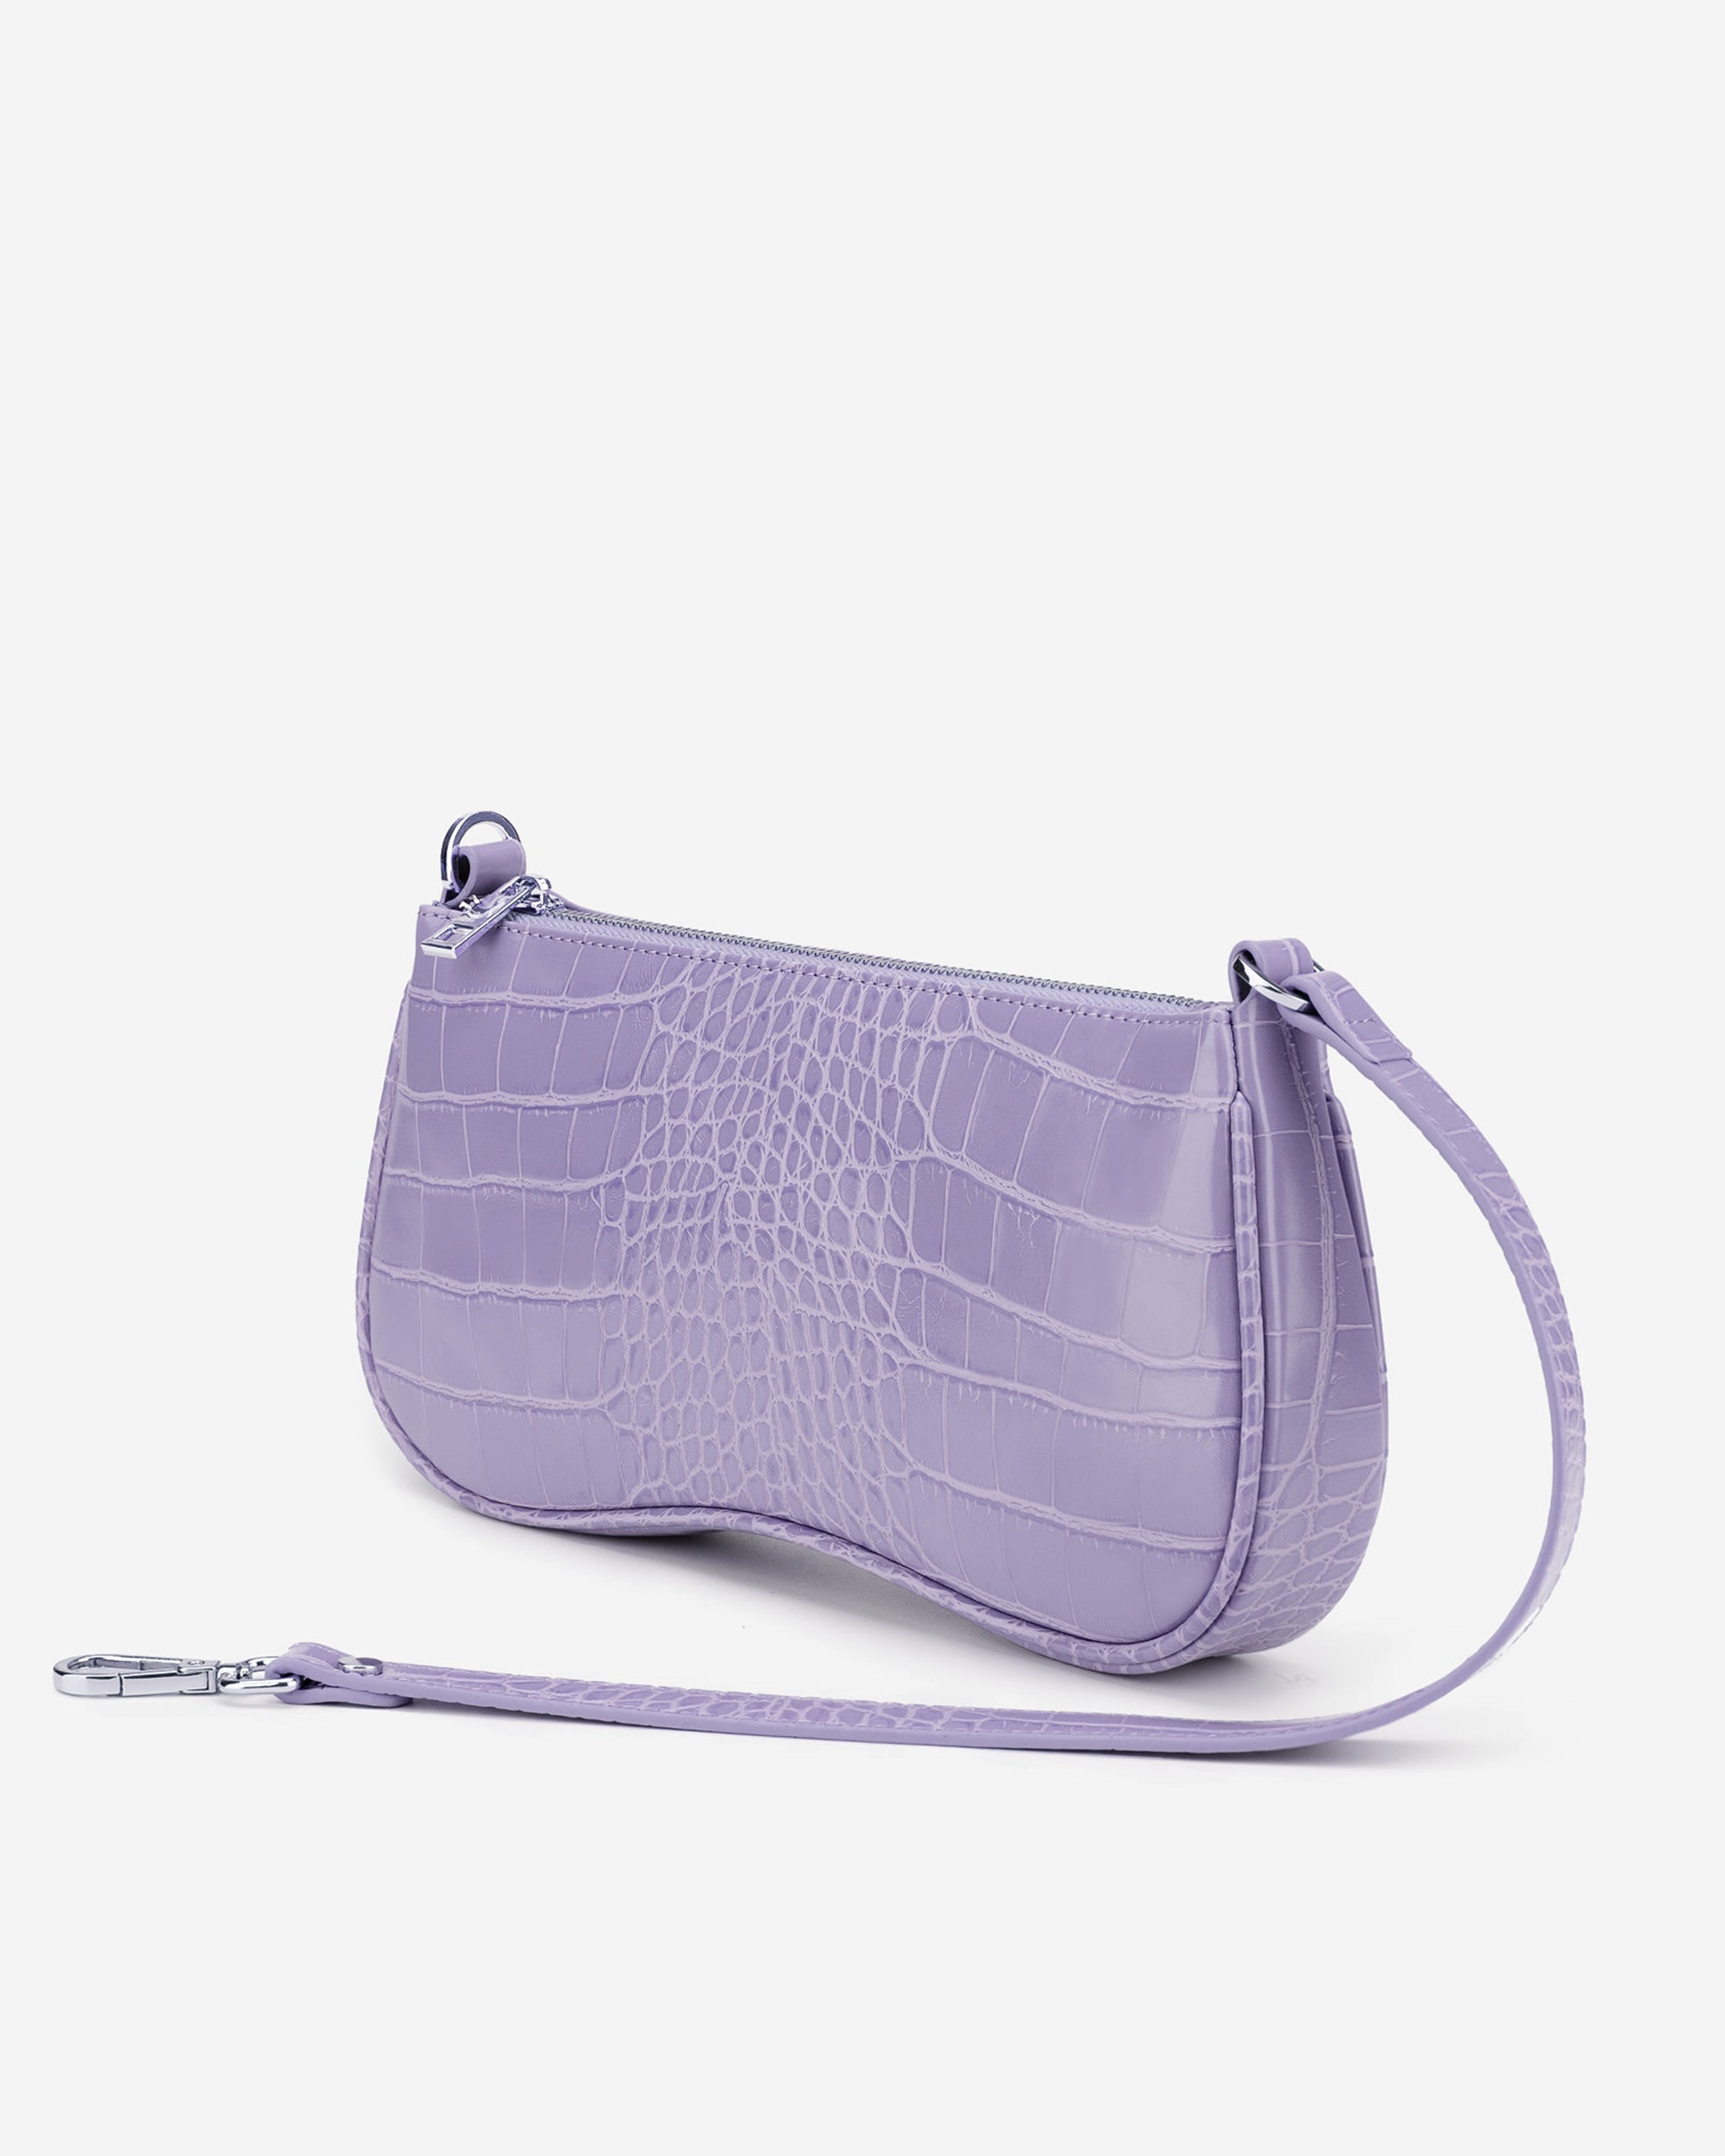 Eva 單肩包 - 紫色鱷魚紋